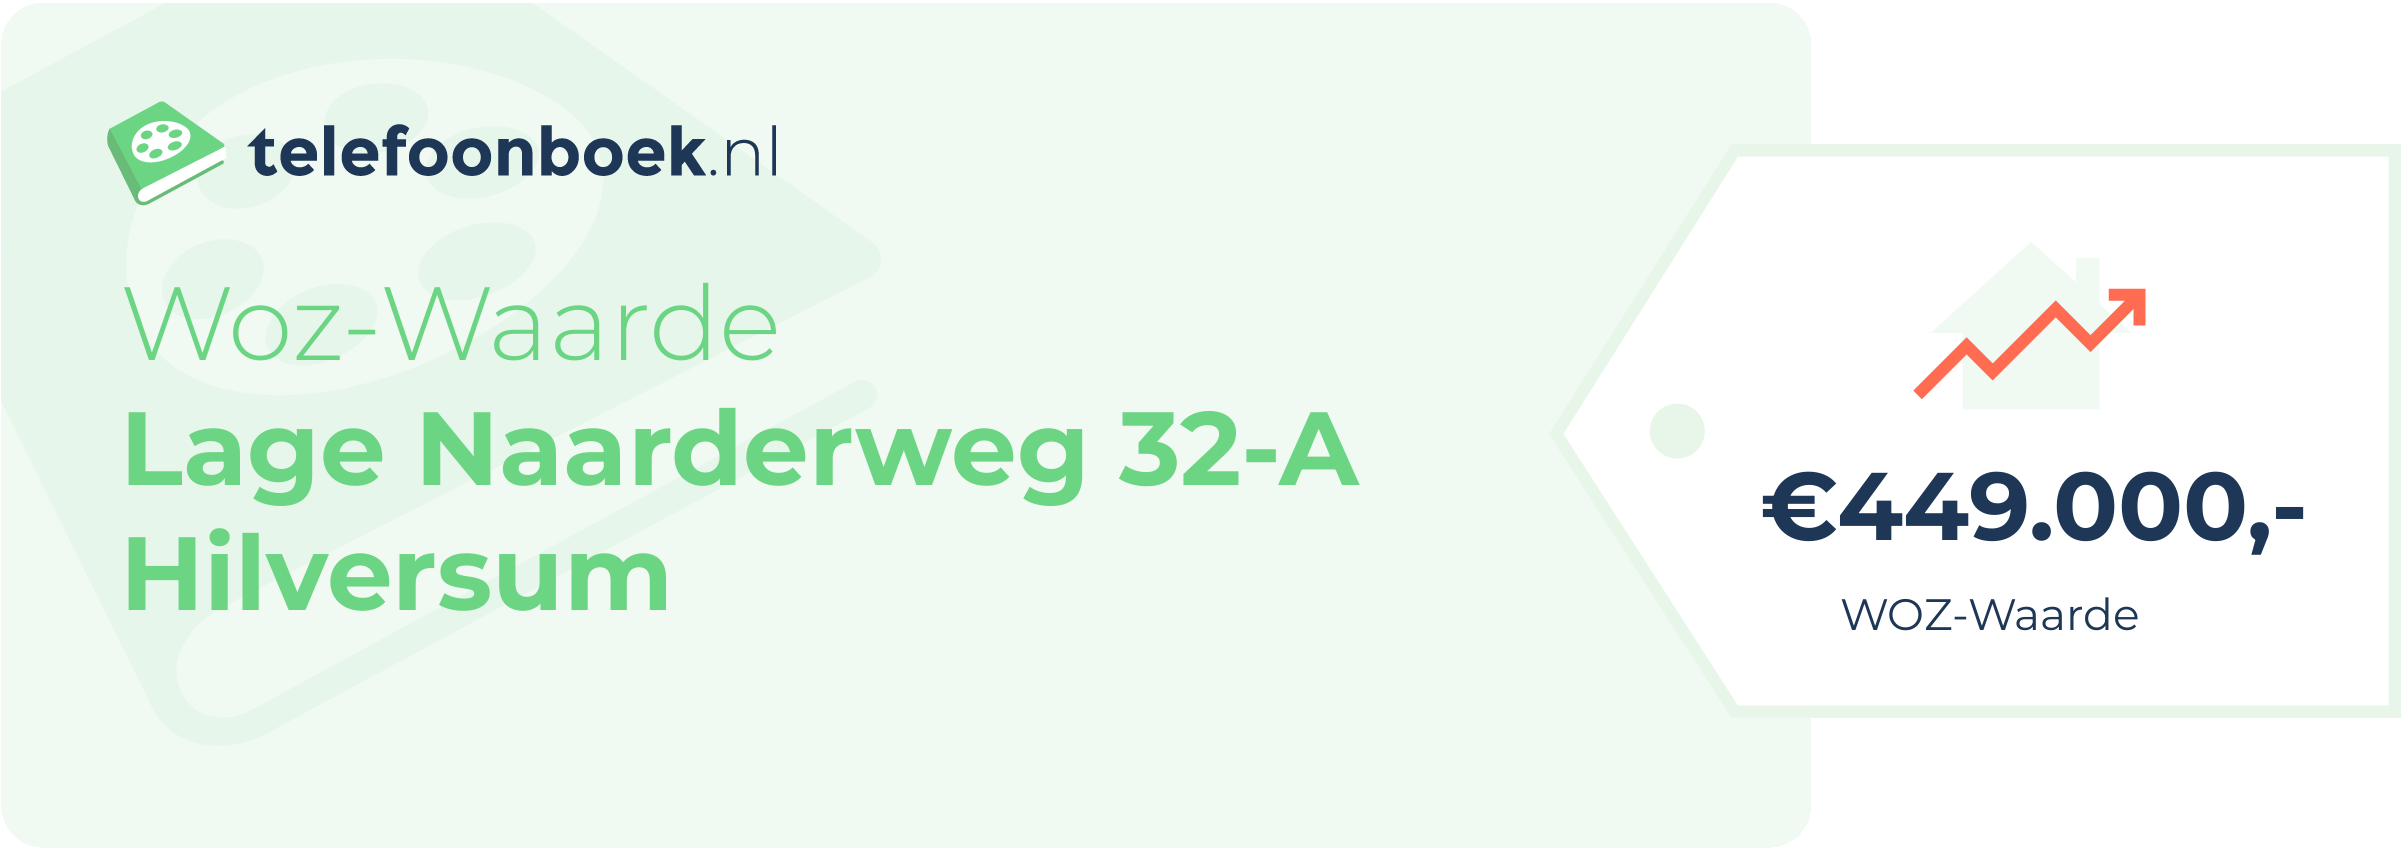 WOZ-waarde Lage Naarderweg 32-A Hilversum